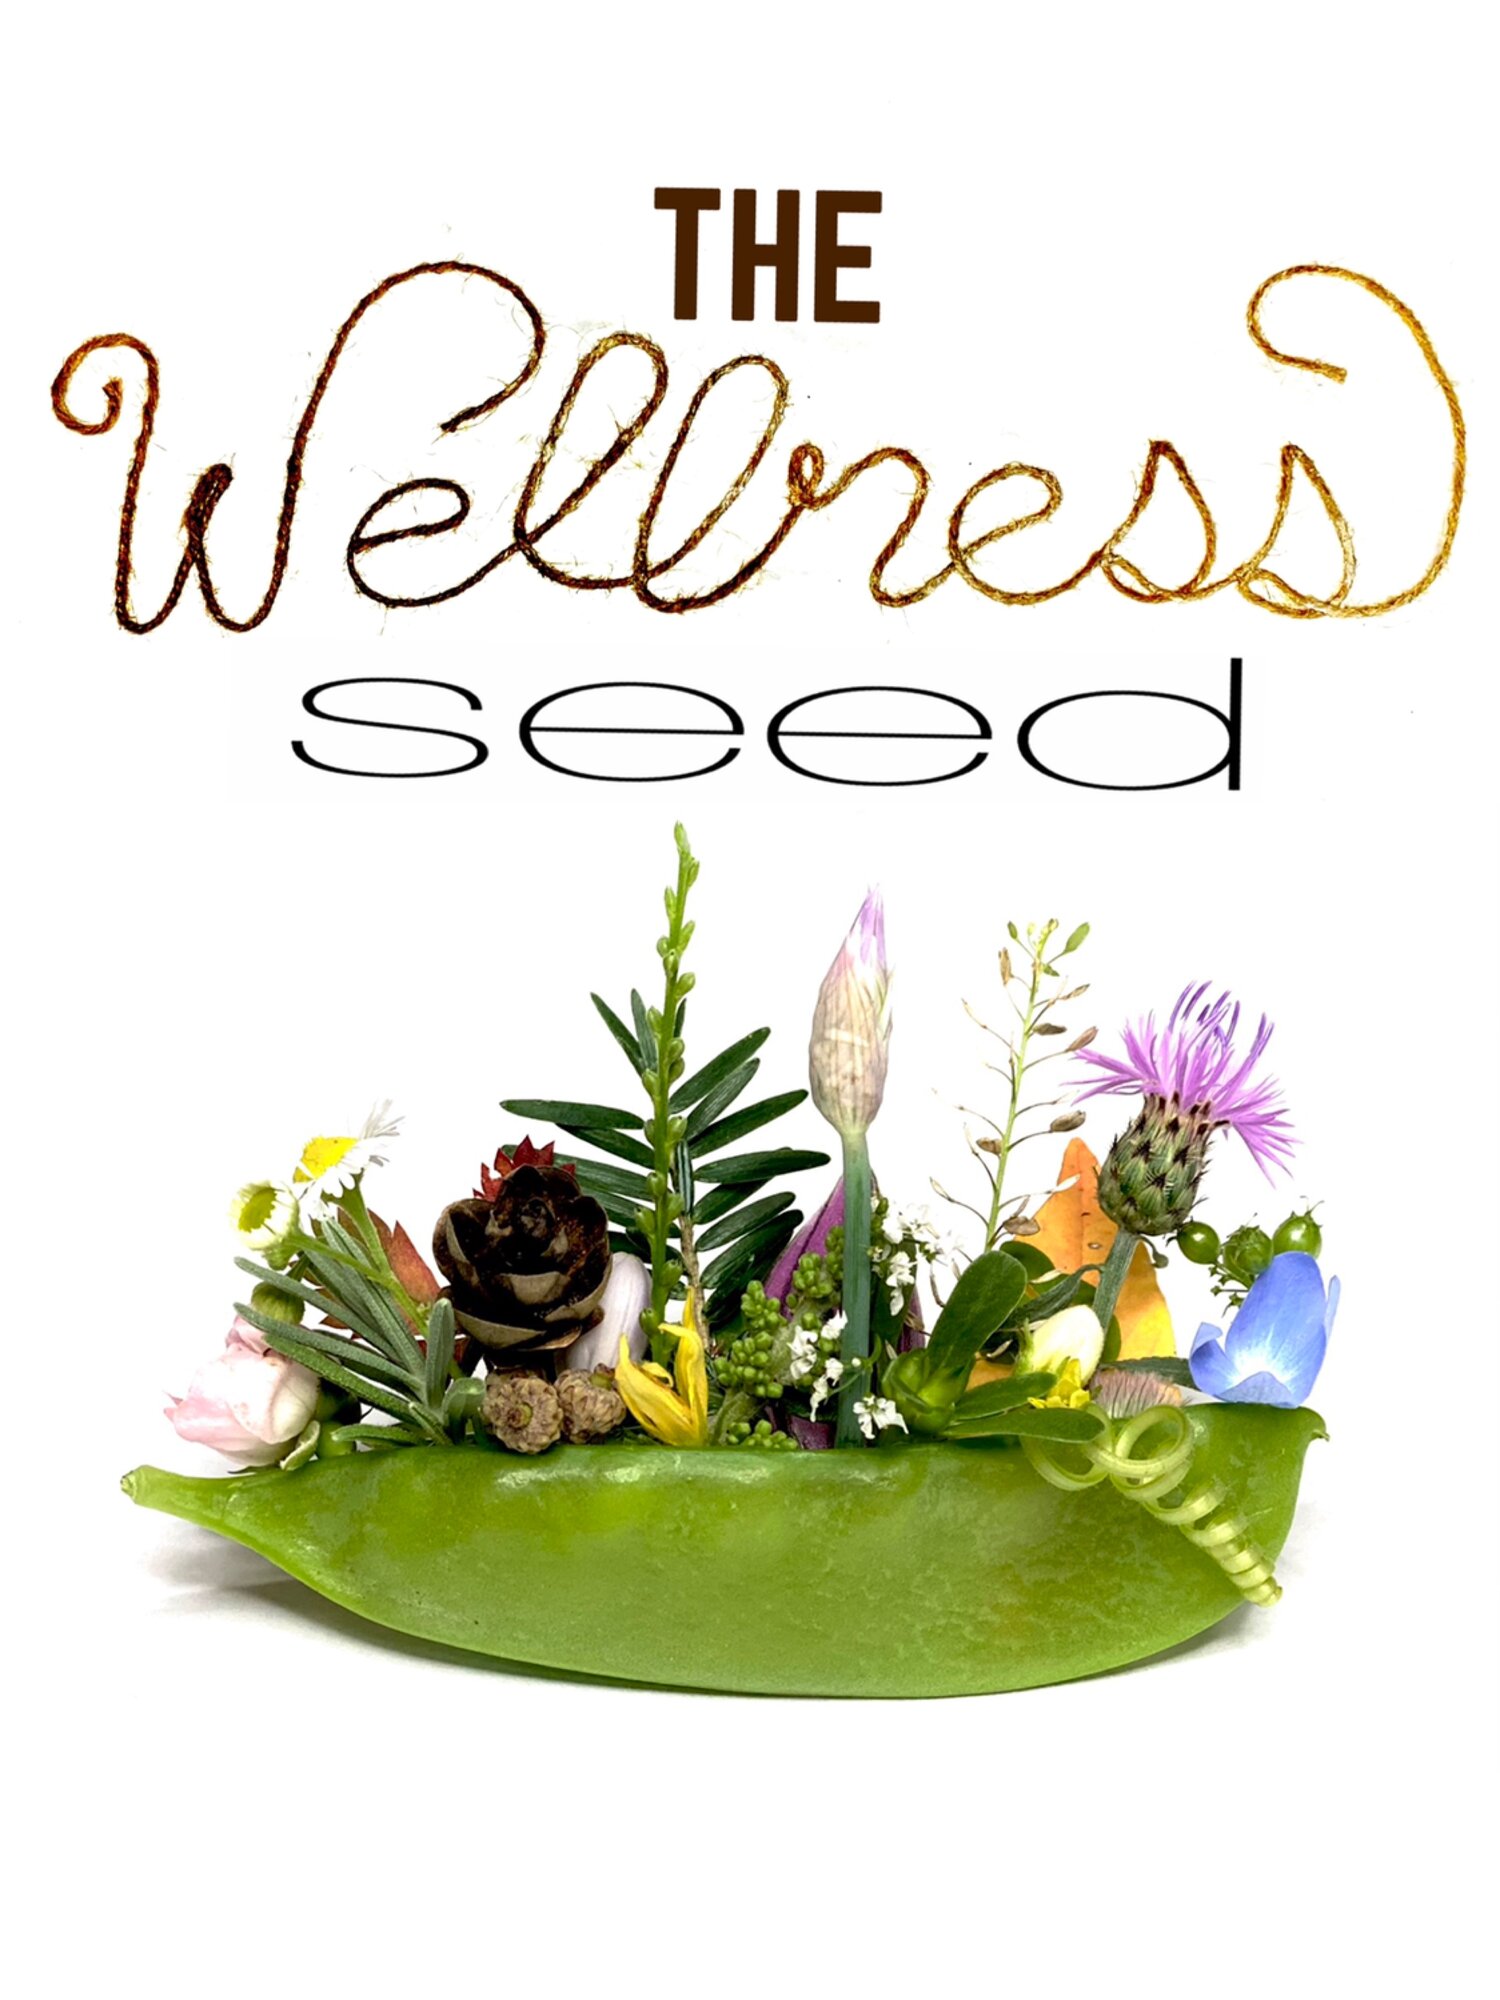 The Wellness Seed